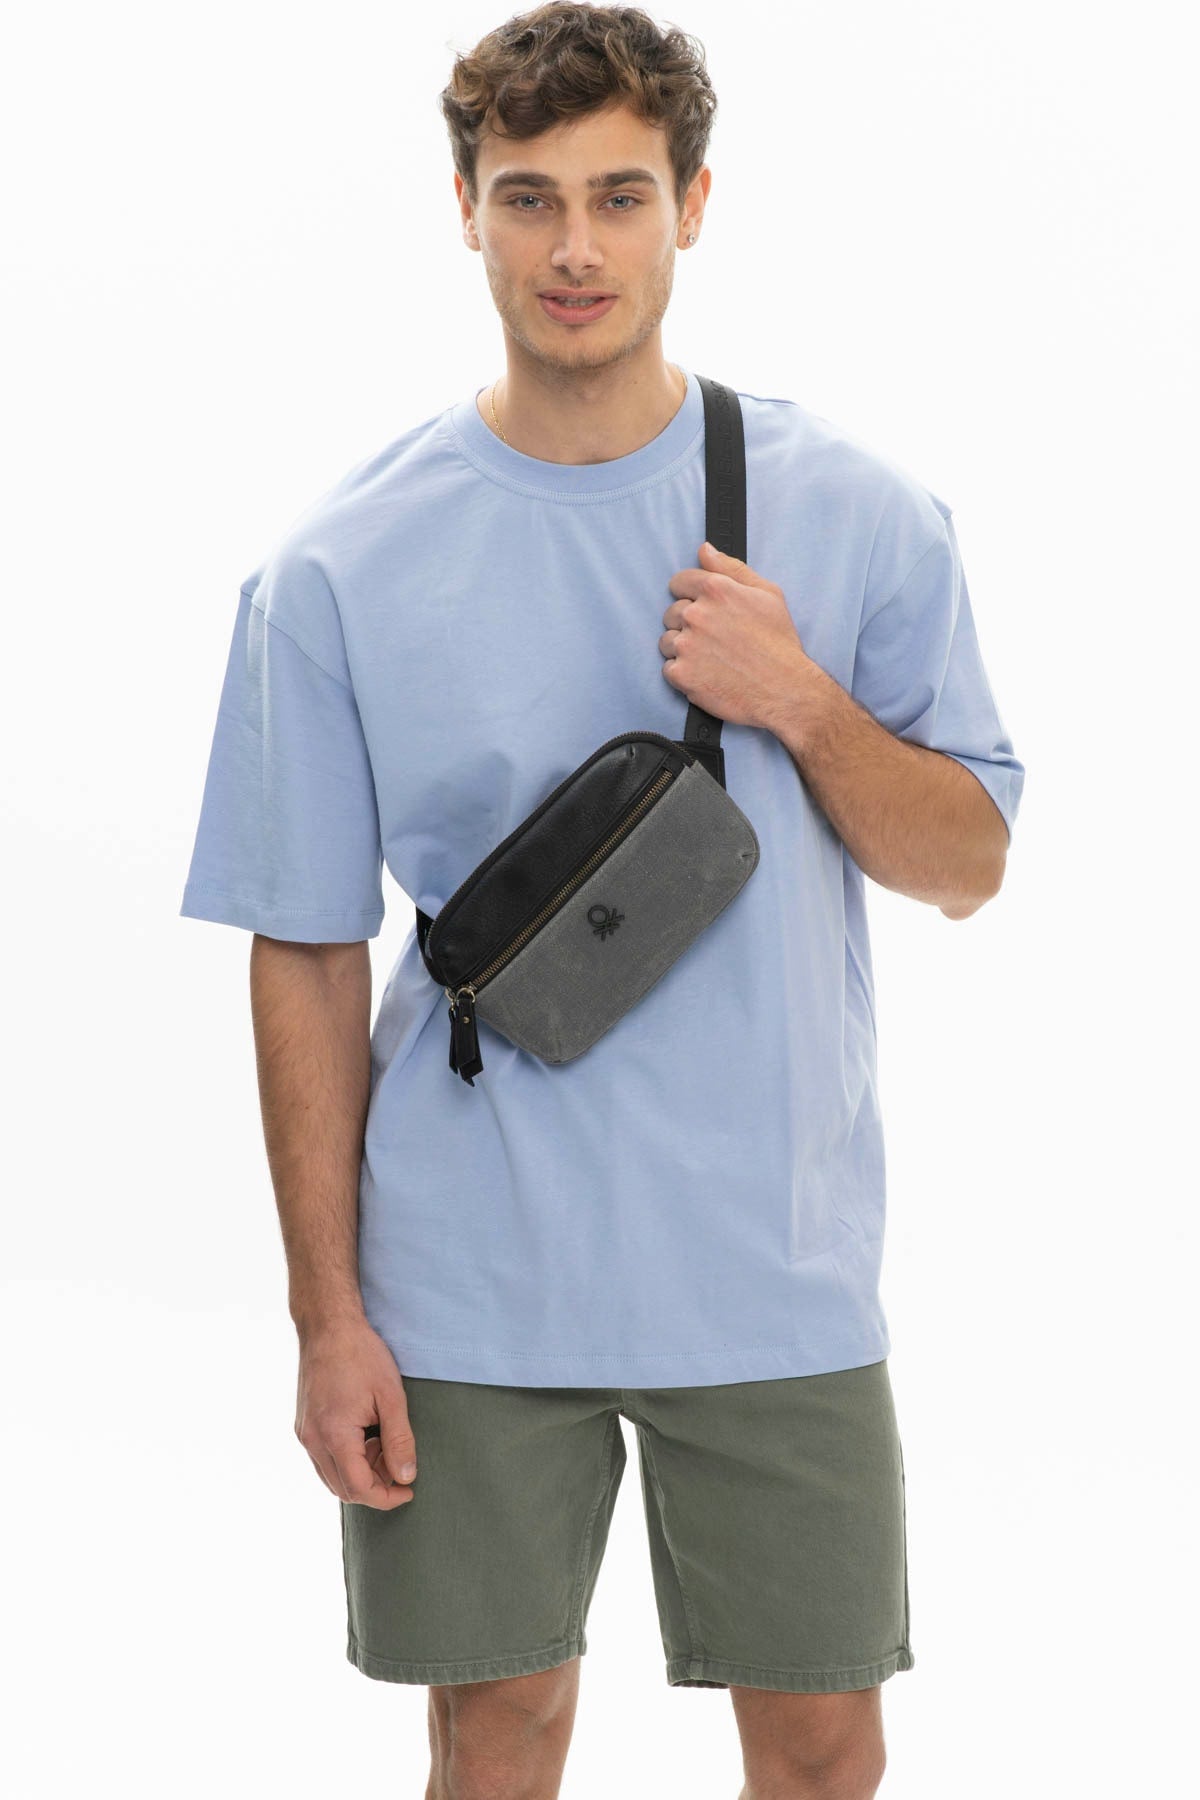 Benetton Men's Waist Bag Gray Bnt1011